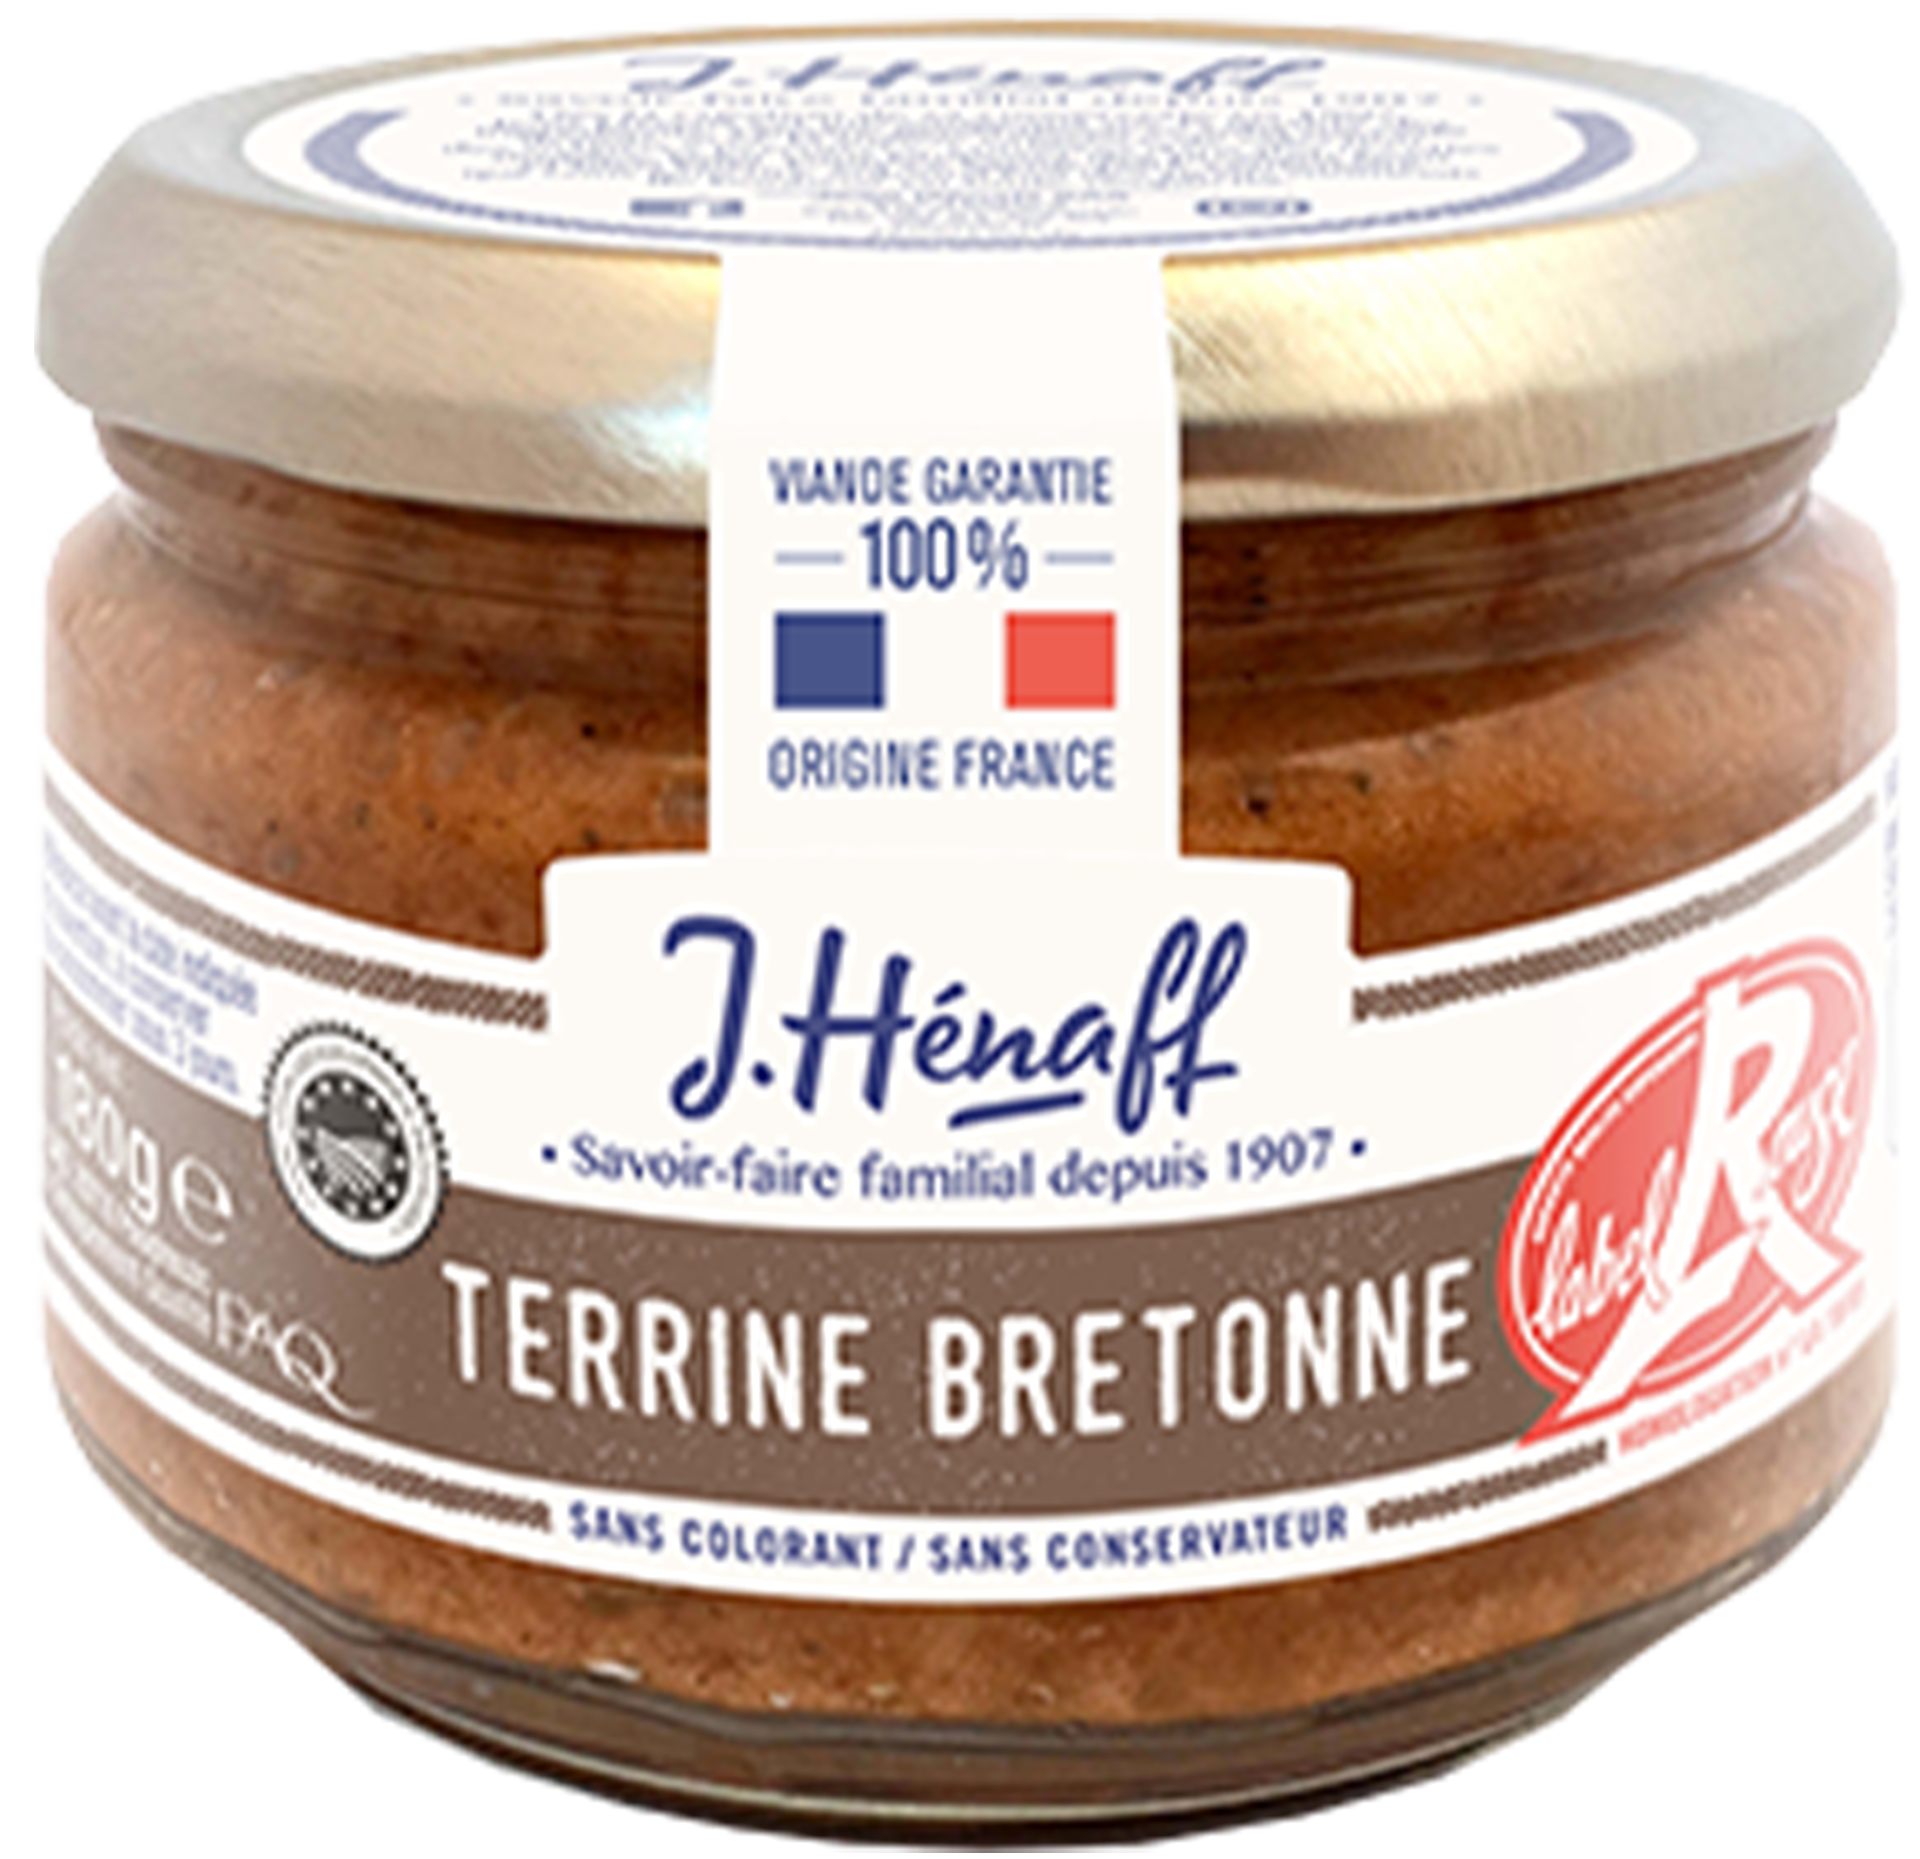 Terrine bretonne Label Rouge